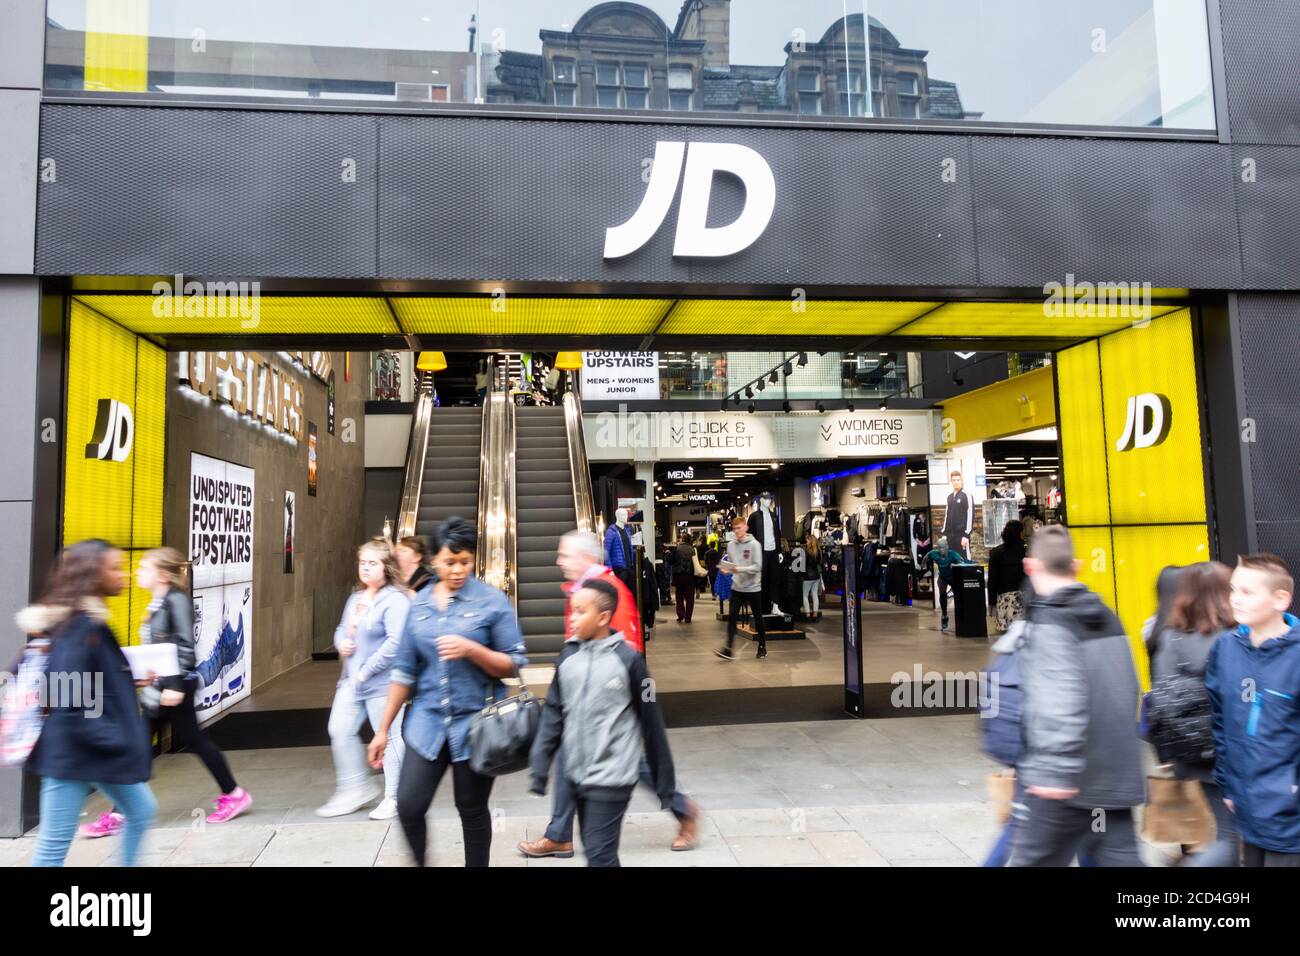 JD sports store on Northumberland street, Newcastle upon Tyne, England. UK  Stock Photo - Alamy